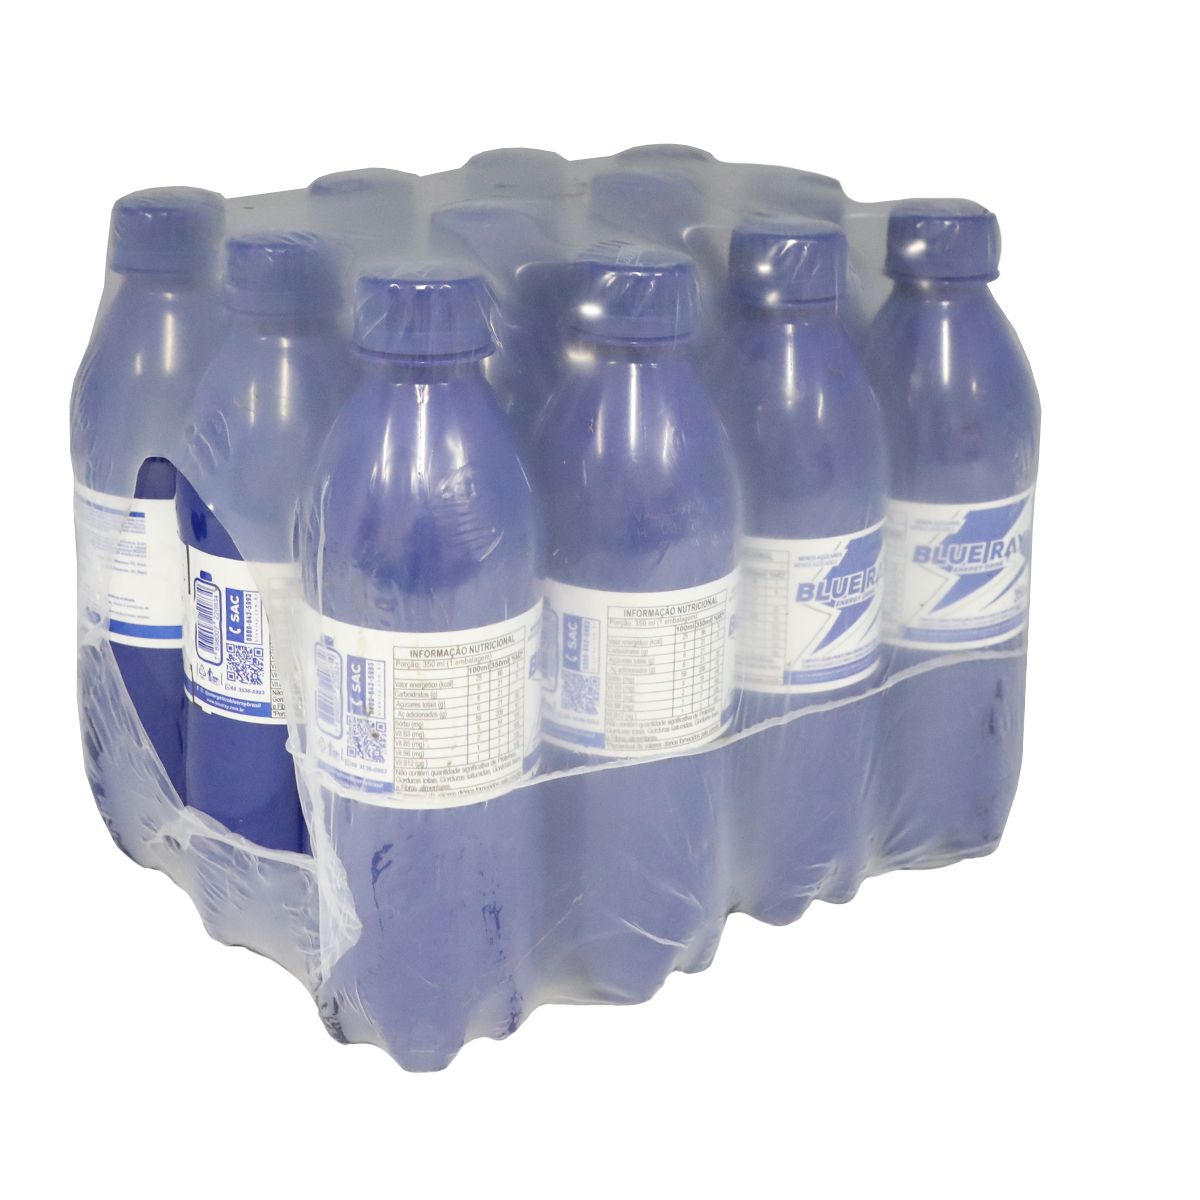 Energético Blue Ray Drink 350ml (Pack com 12 und)